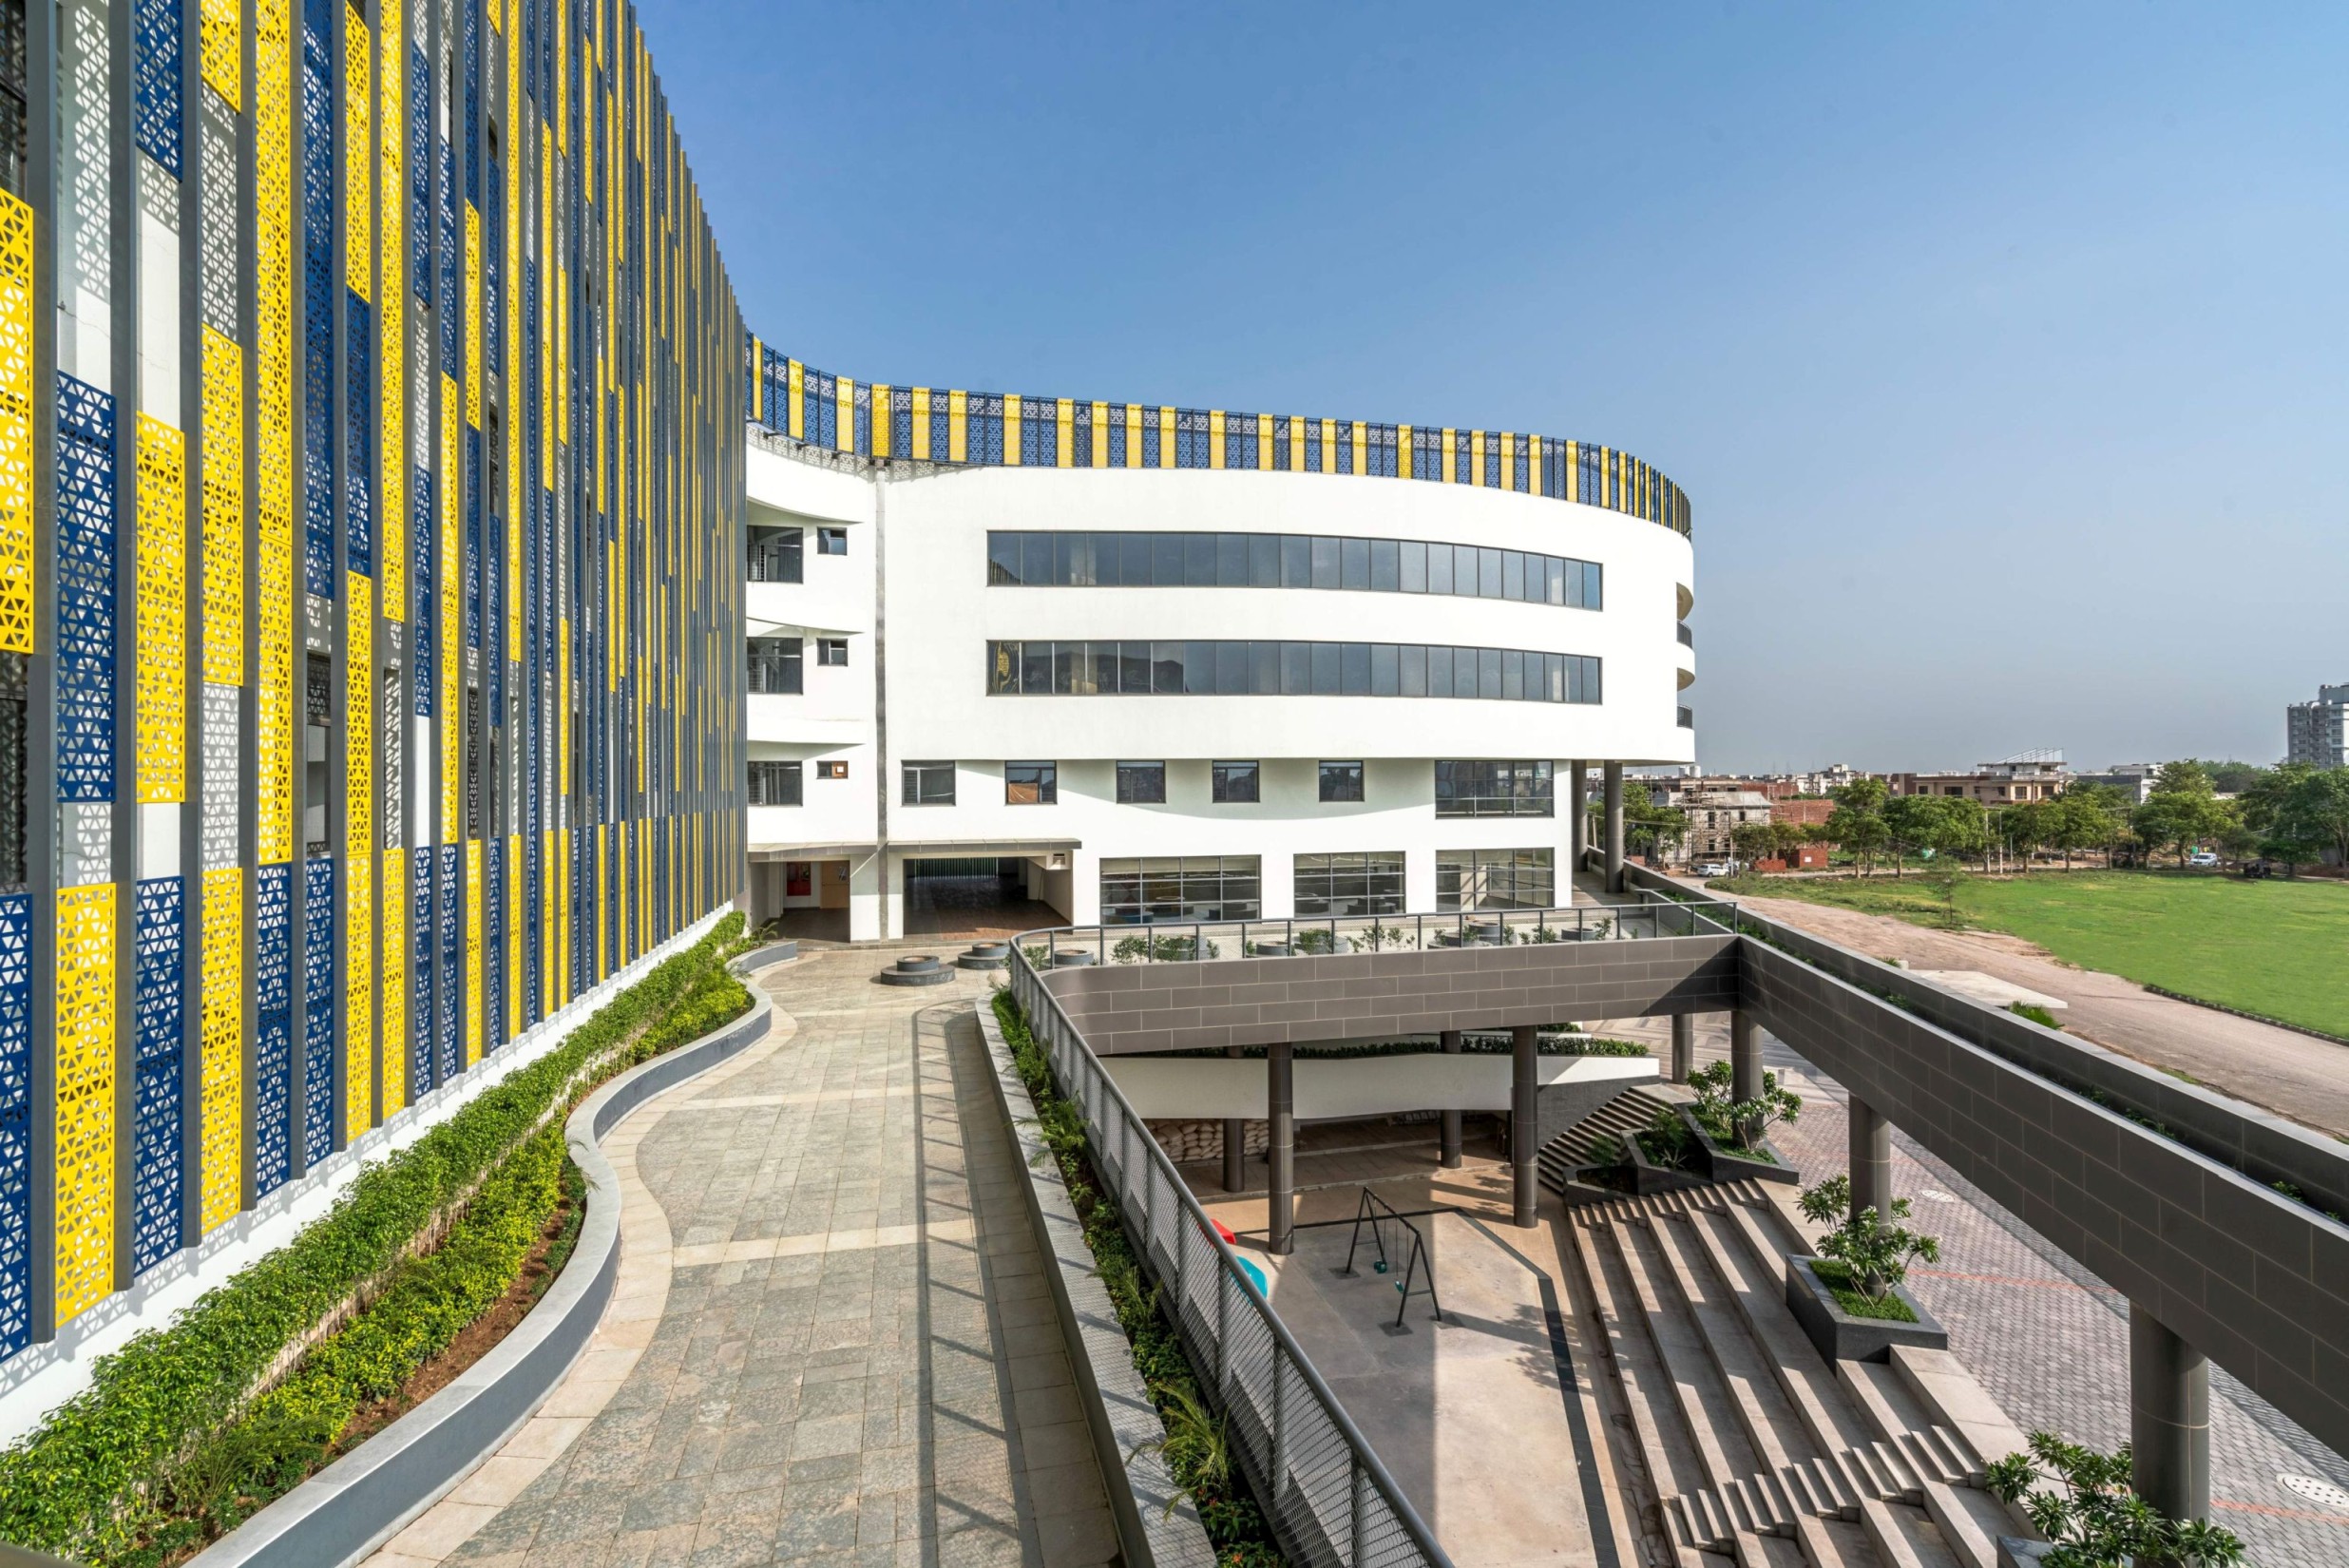 Amity International School, Mohali by Vijay Gupta Architects 11